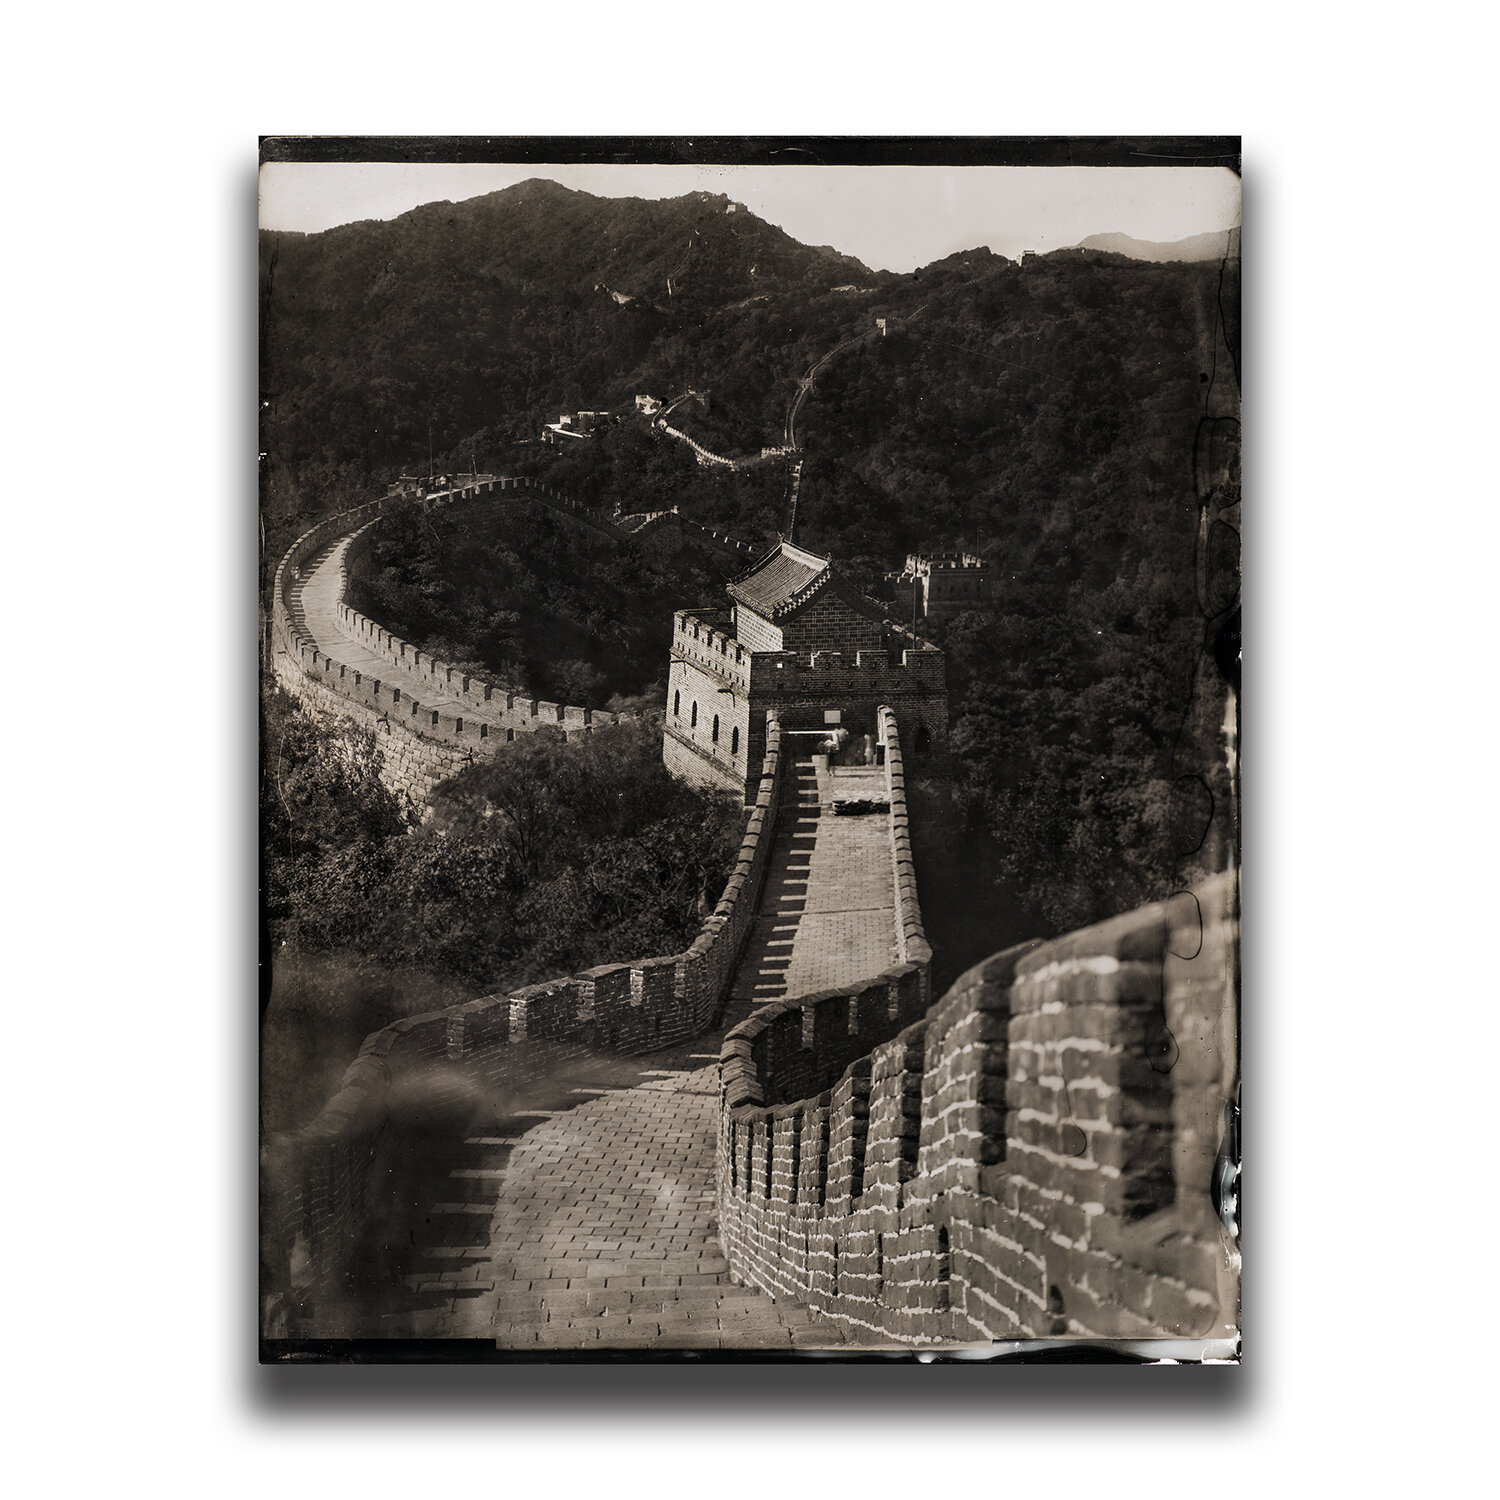 Great Wall of China・Badaling/万里の長城・慕田峪/만리장성・모전욕 장성/万里長城・慕田峪